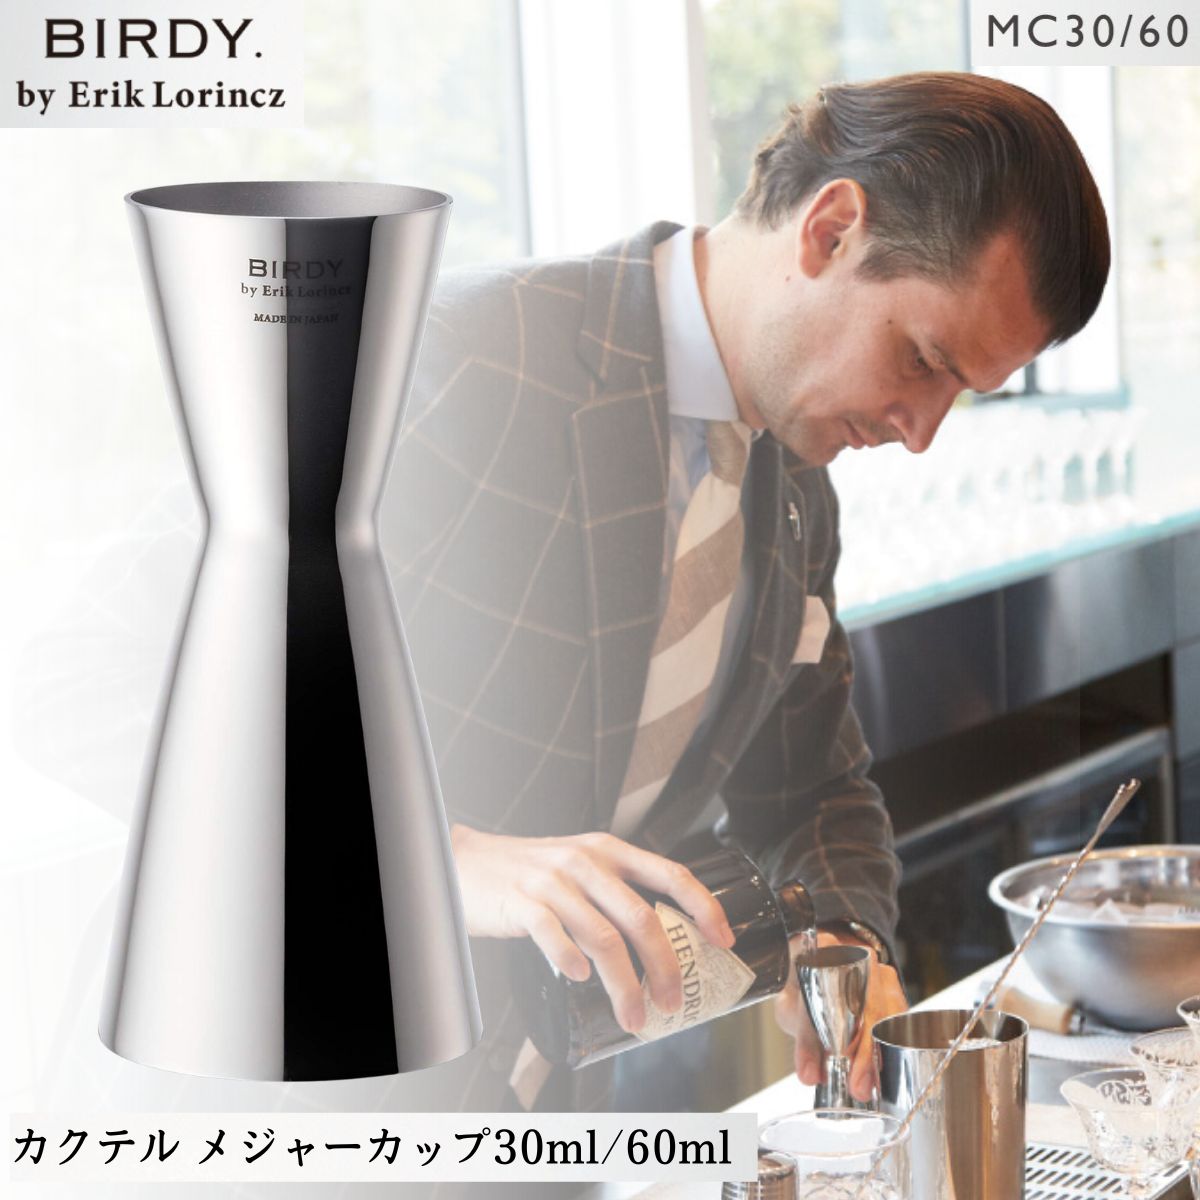 BIRDY. メジャーカップ MC30/60 ステンレス製 BIRDY. by Erik Lorincz 送料無料